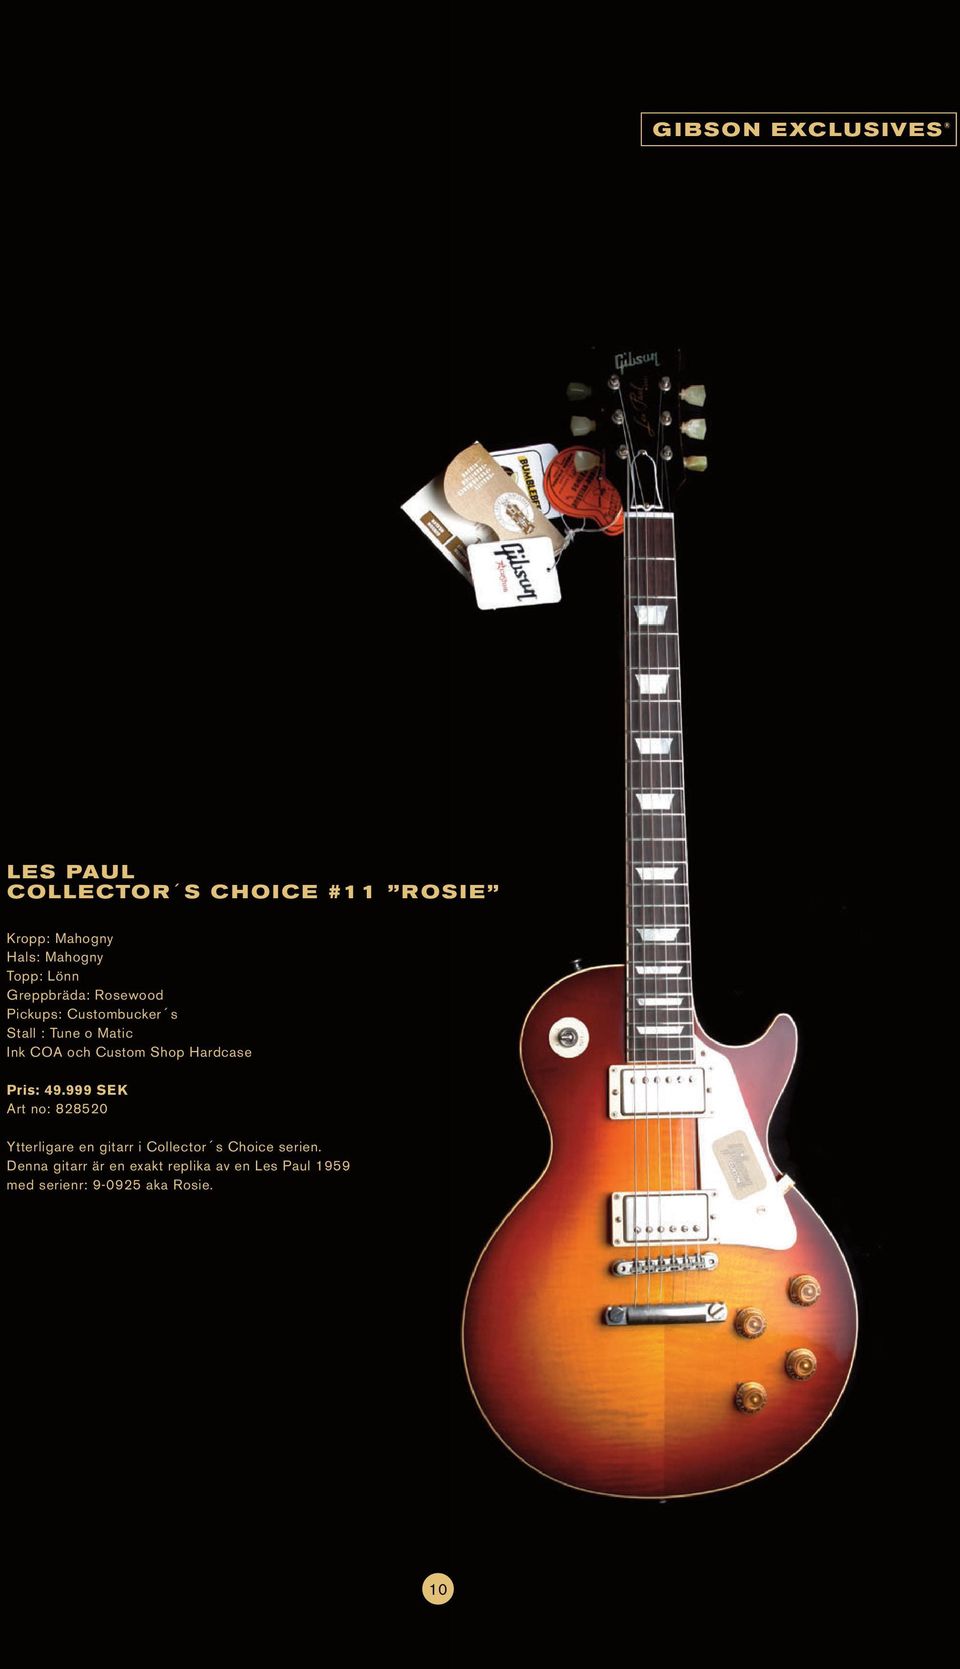 999 SEK Art no: 828520 Ytterligare en gitarr i Collector s Choice